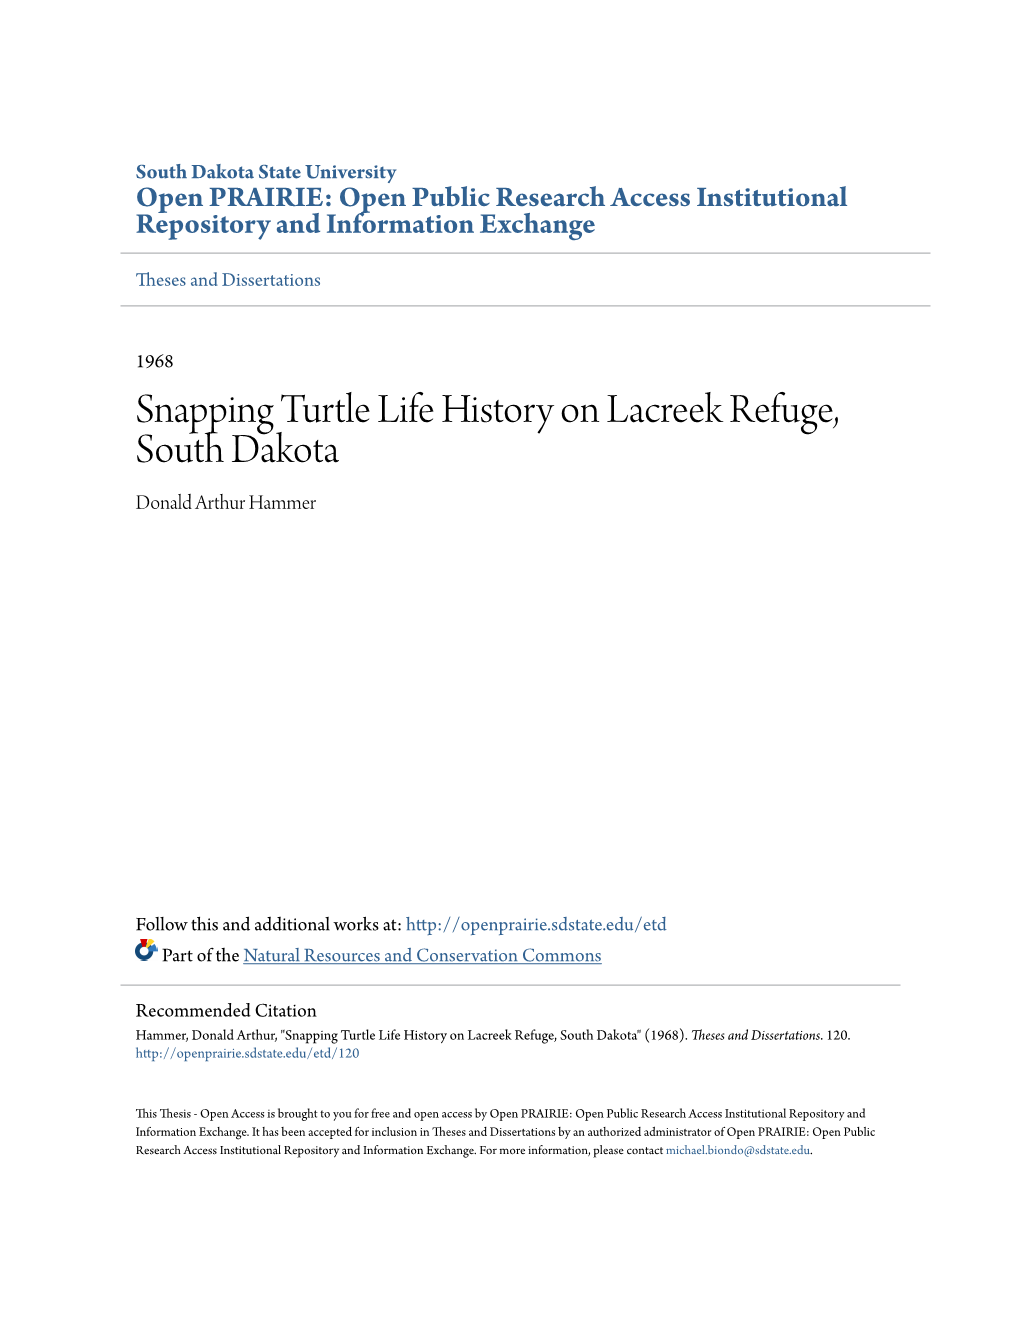 Snapping Turtle Life History on Lacreek Refuge, South Dakota Donald Arthur Hammer